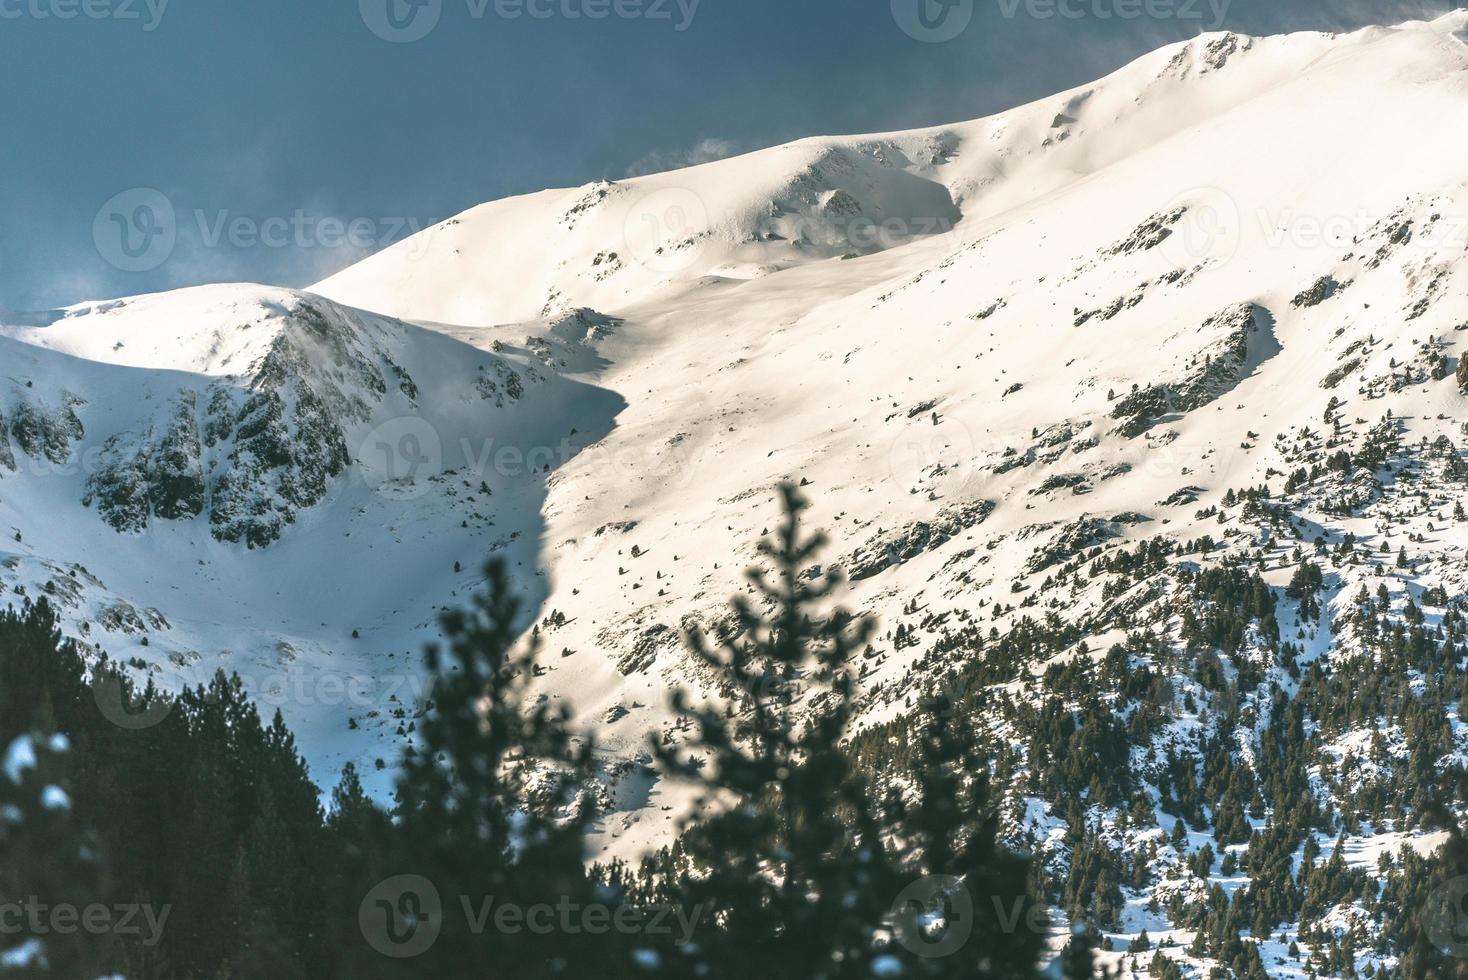 montagne dans la station de ski de grandvalira en andorre en temps de covid19 en hiver 2020 photo